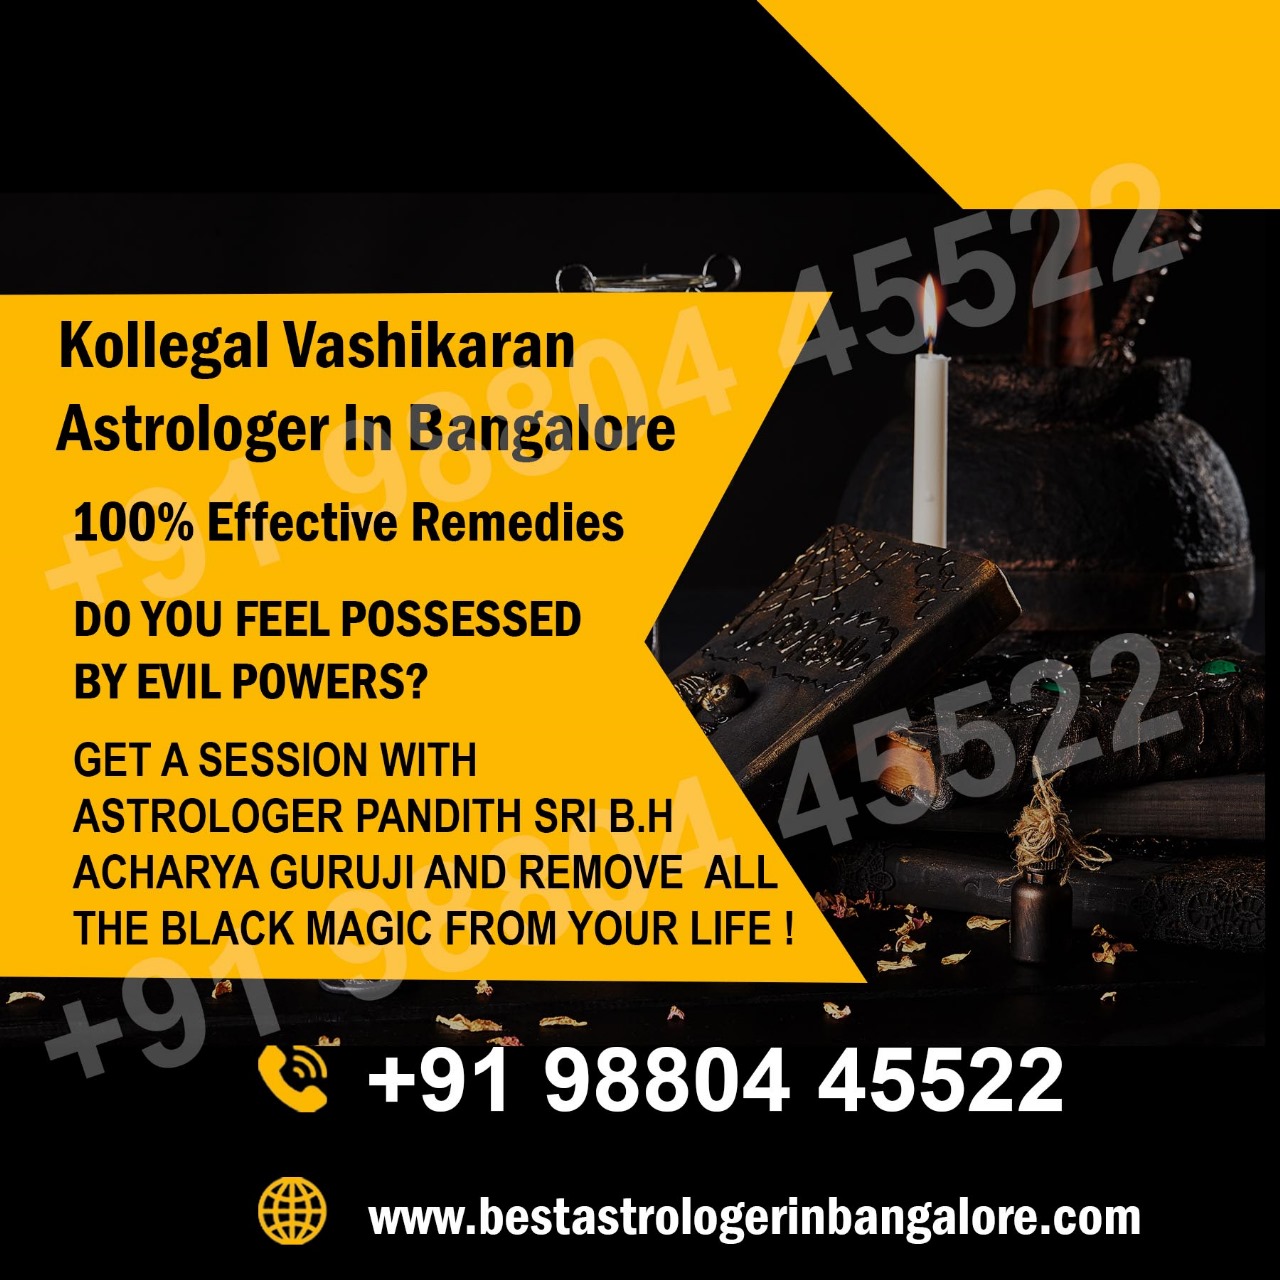 Kollegal Vashikaran Astrologer in Bangalore